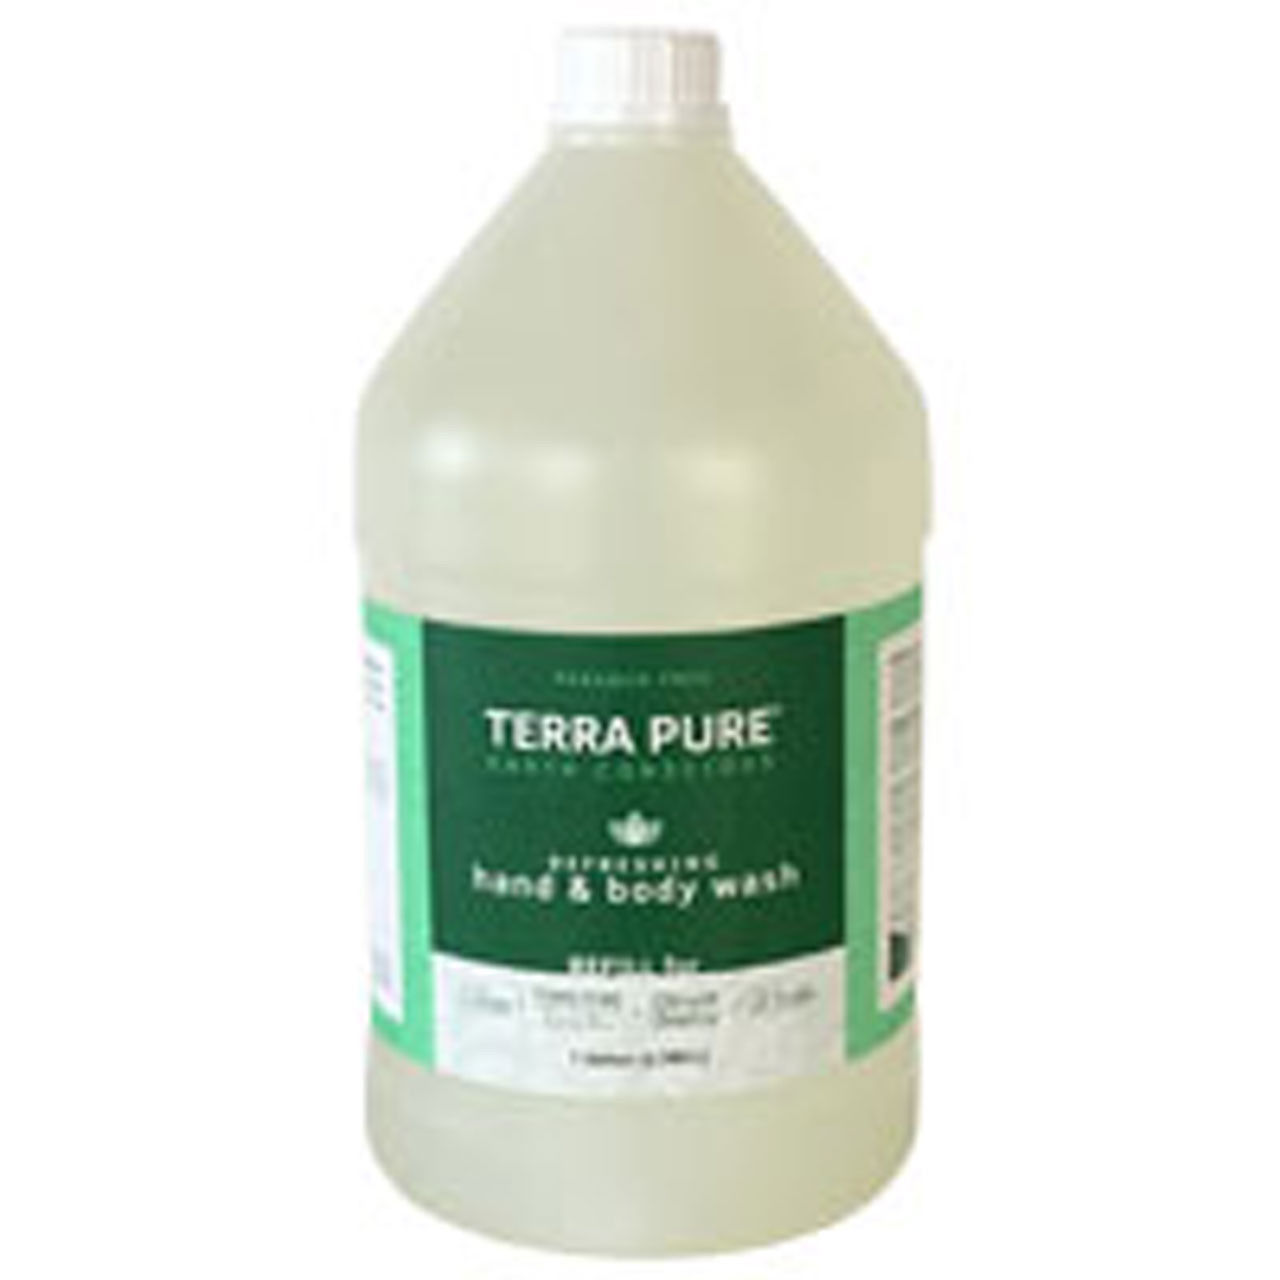 What are the characteristics of TERRA PURE GREEN TEA BULK within the TERRA PURE GREEN TEA line?